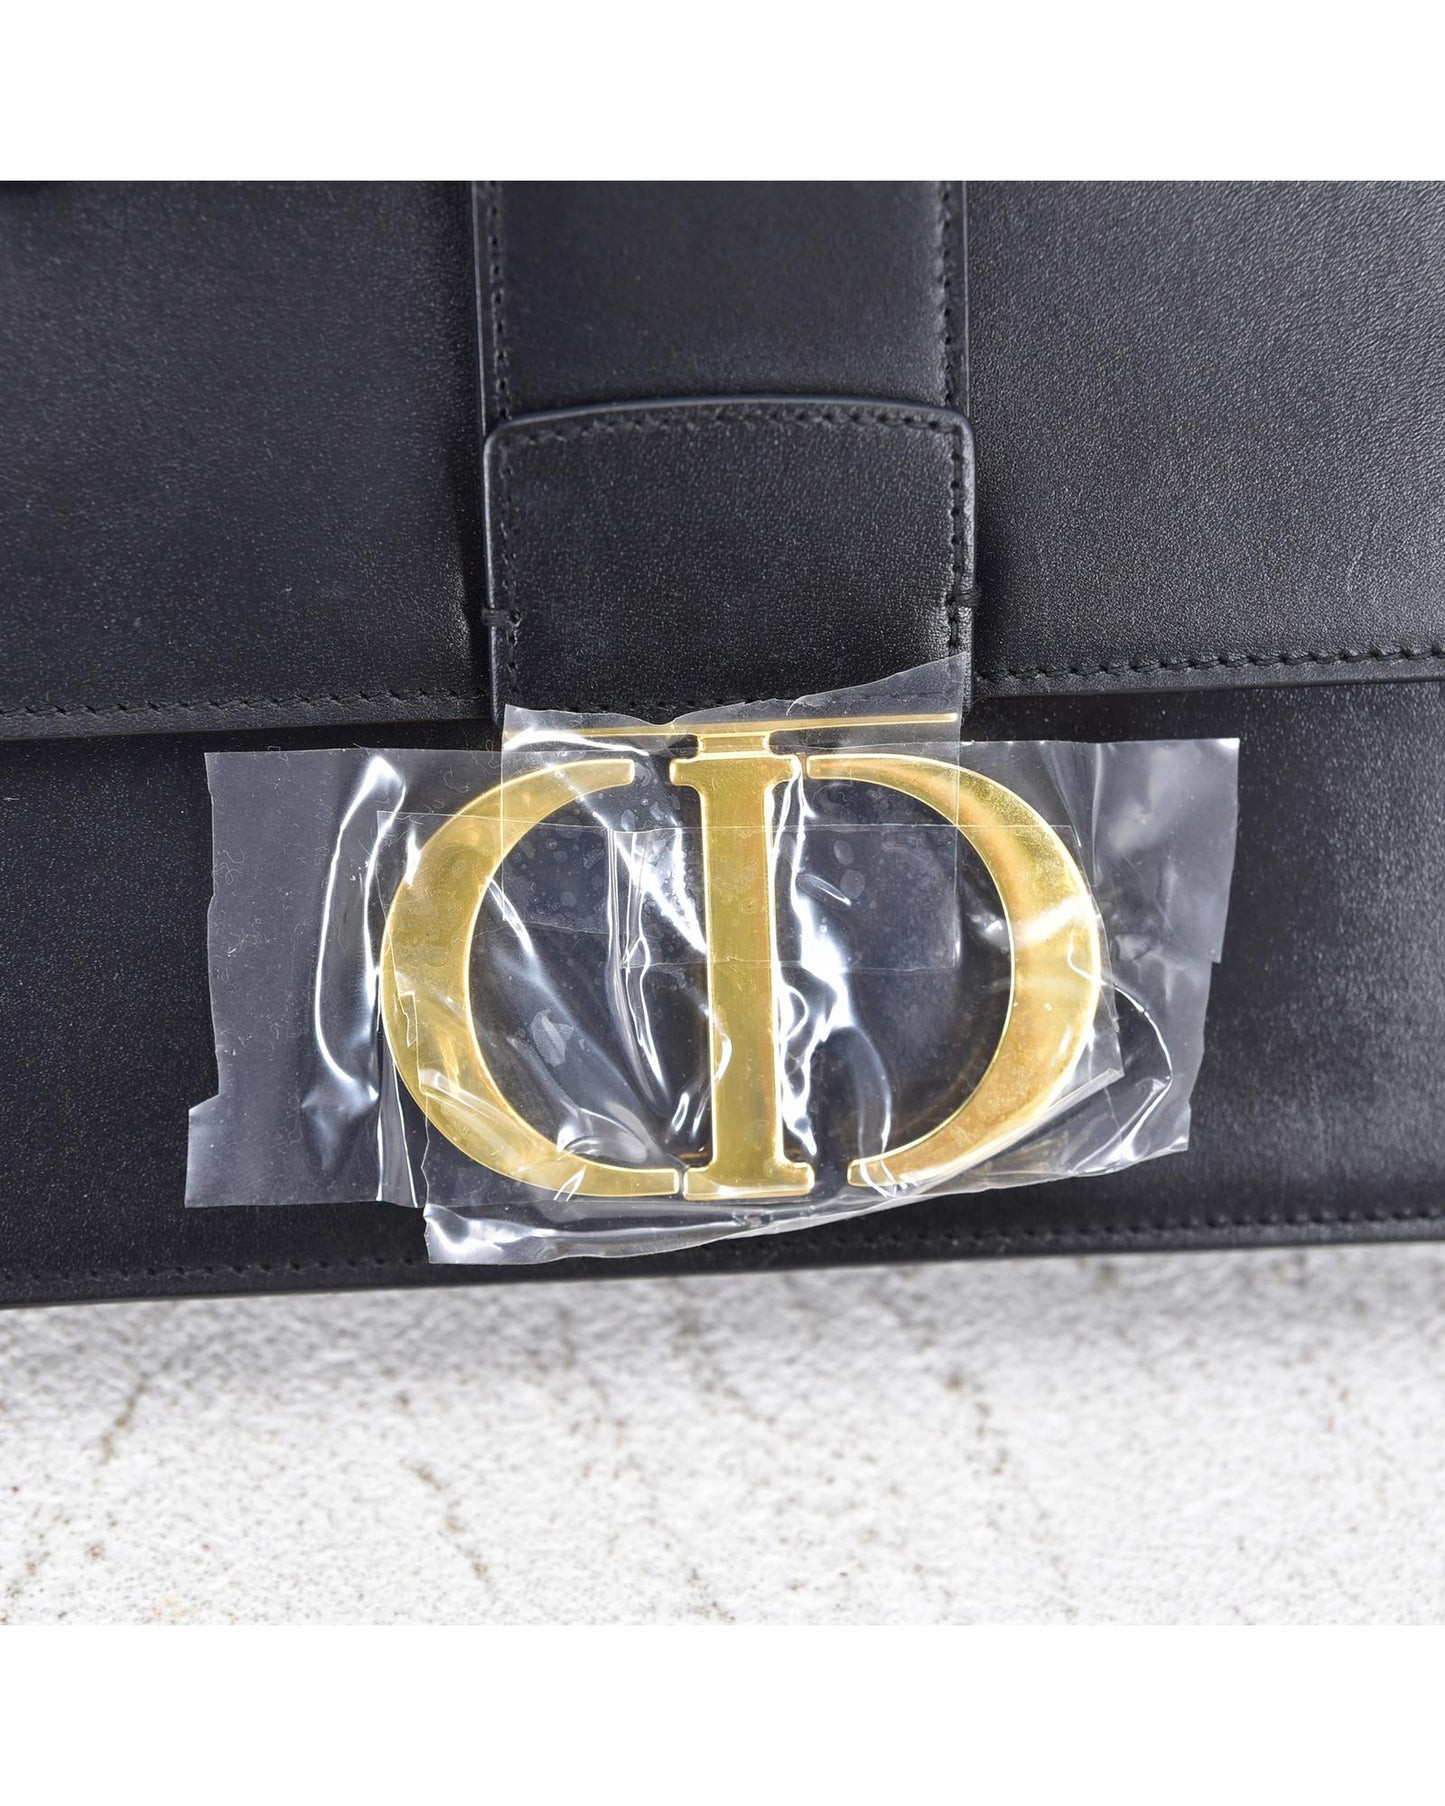 Dior Women's Leather Crossbody Bag in black